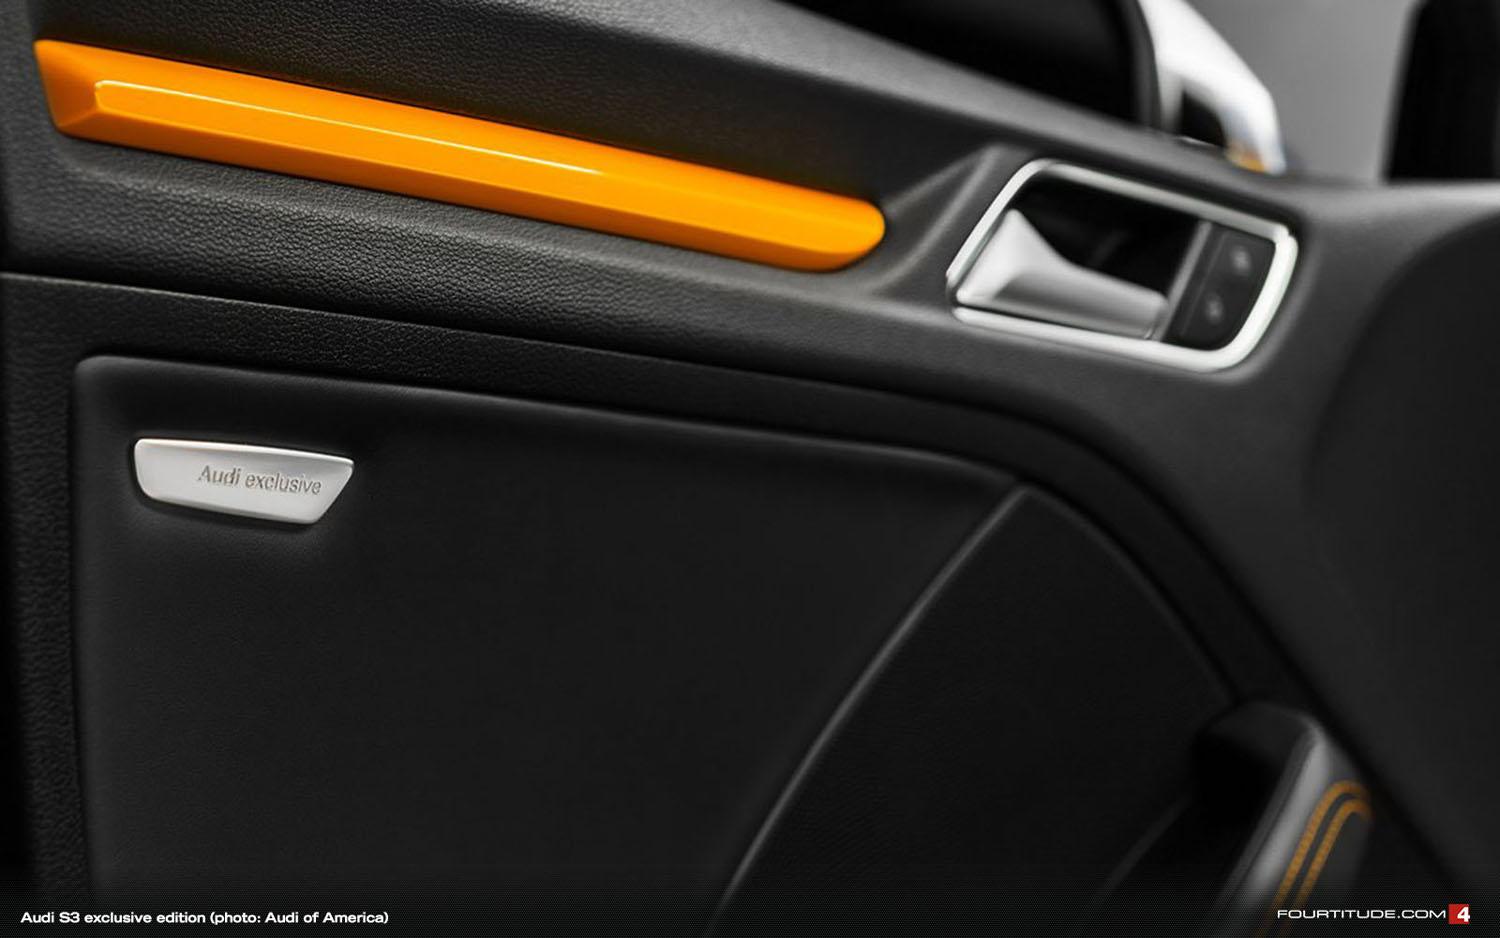 Audi S3 exclusive edition